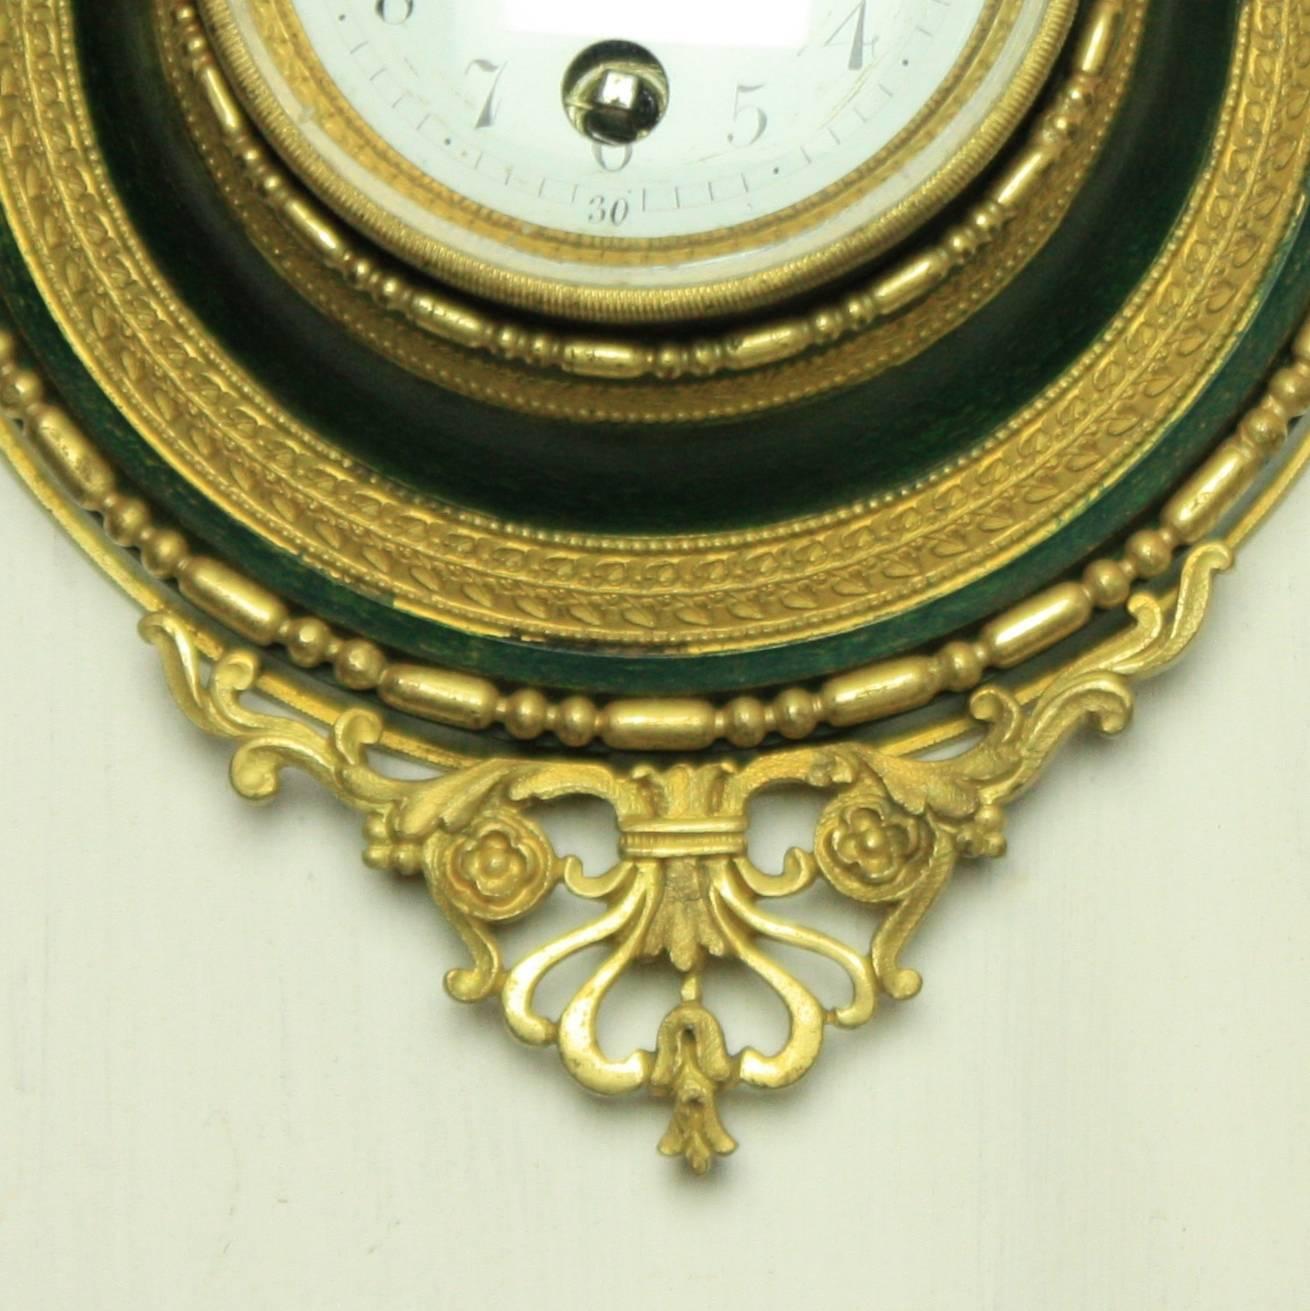 Napoleon III Small 19th Century Alcove Wall Clock